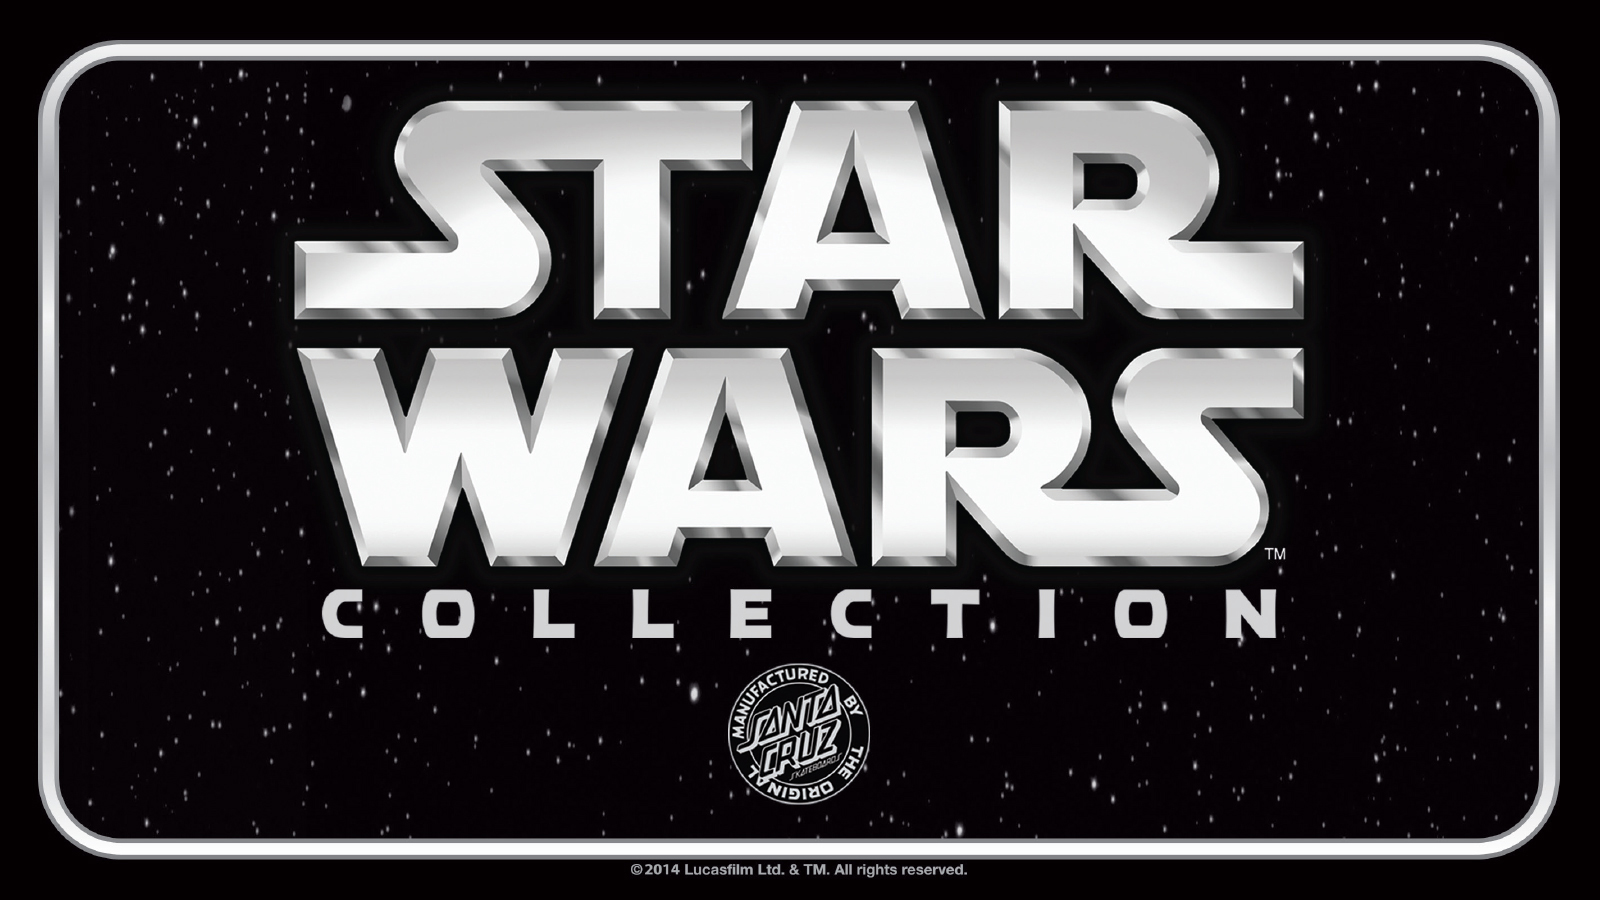 New Star Wars and Santa Cruz board collection hitting North American stores today!